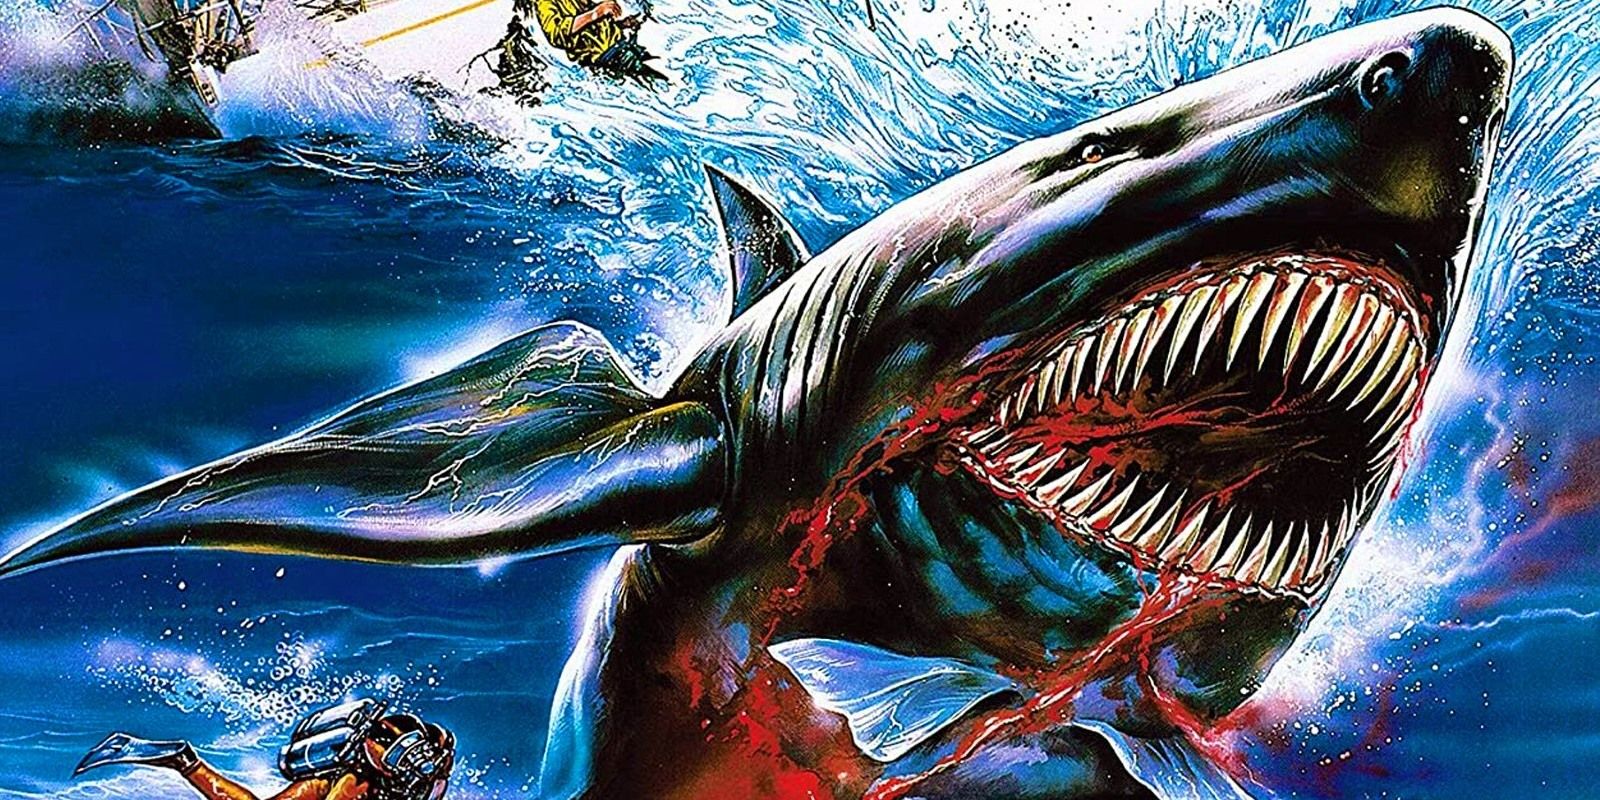 Jaws: The Revenge's Italian Ripoff Deep Blood explicado (¿es mejor?)